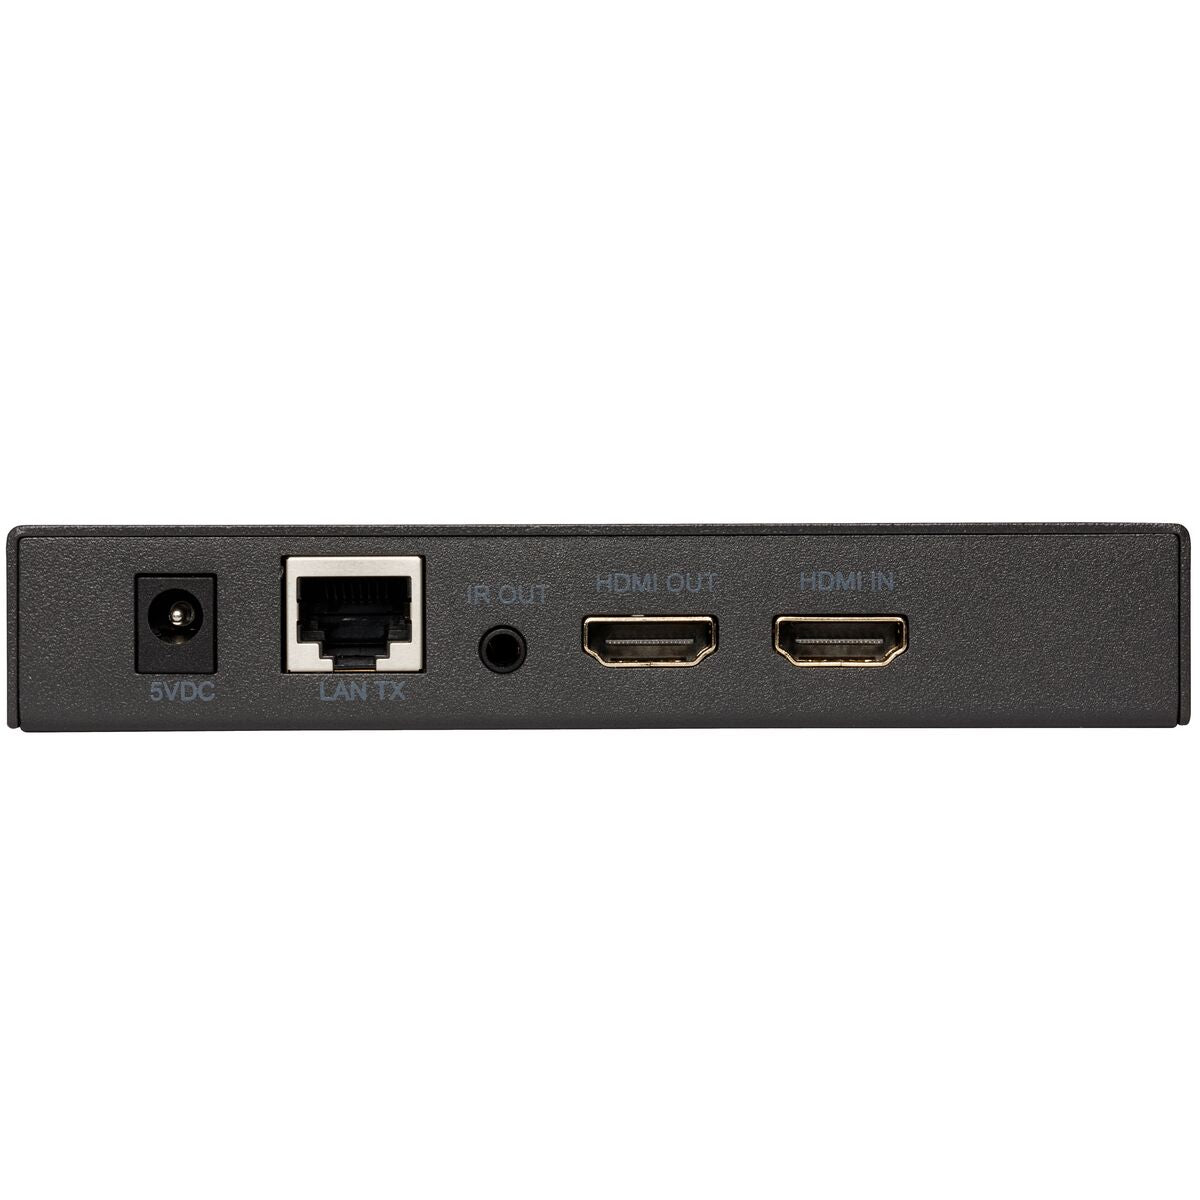 MegaView 91 Voordeelbundel II - HDMI extender Ethernet + 2 extra HDMI receivers - Back View Image HDMI Transmitter | Marmitek